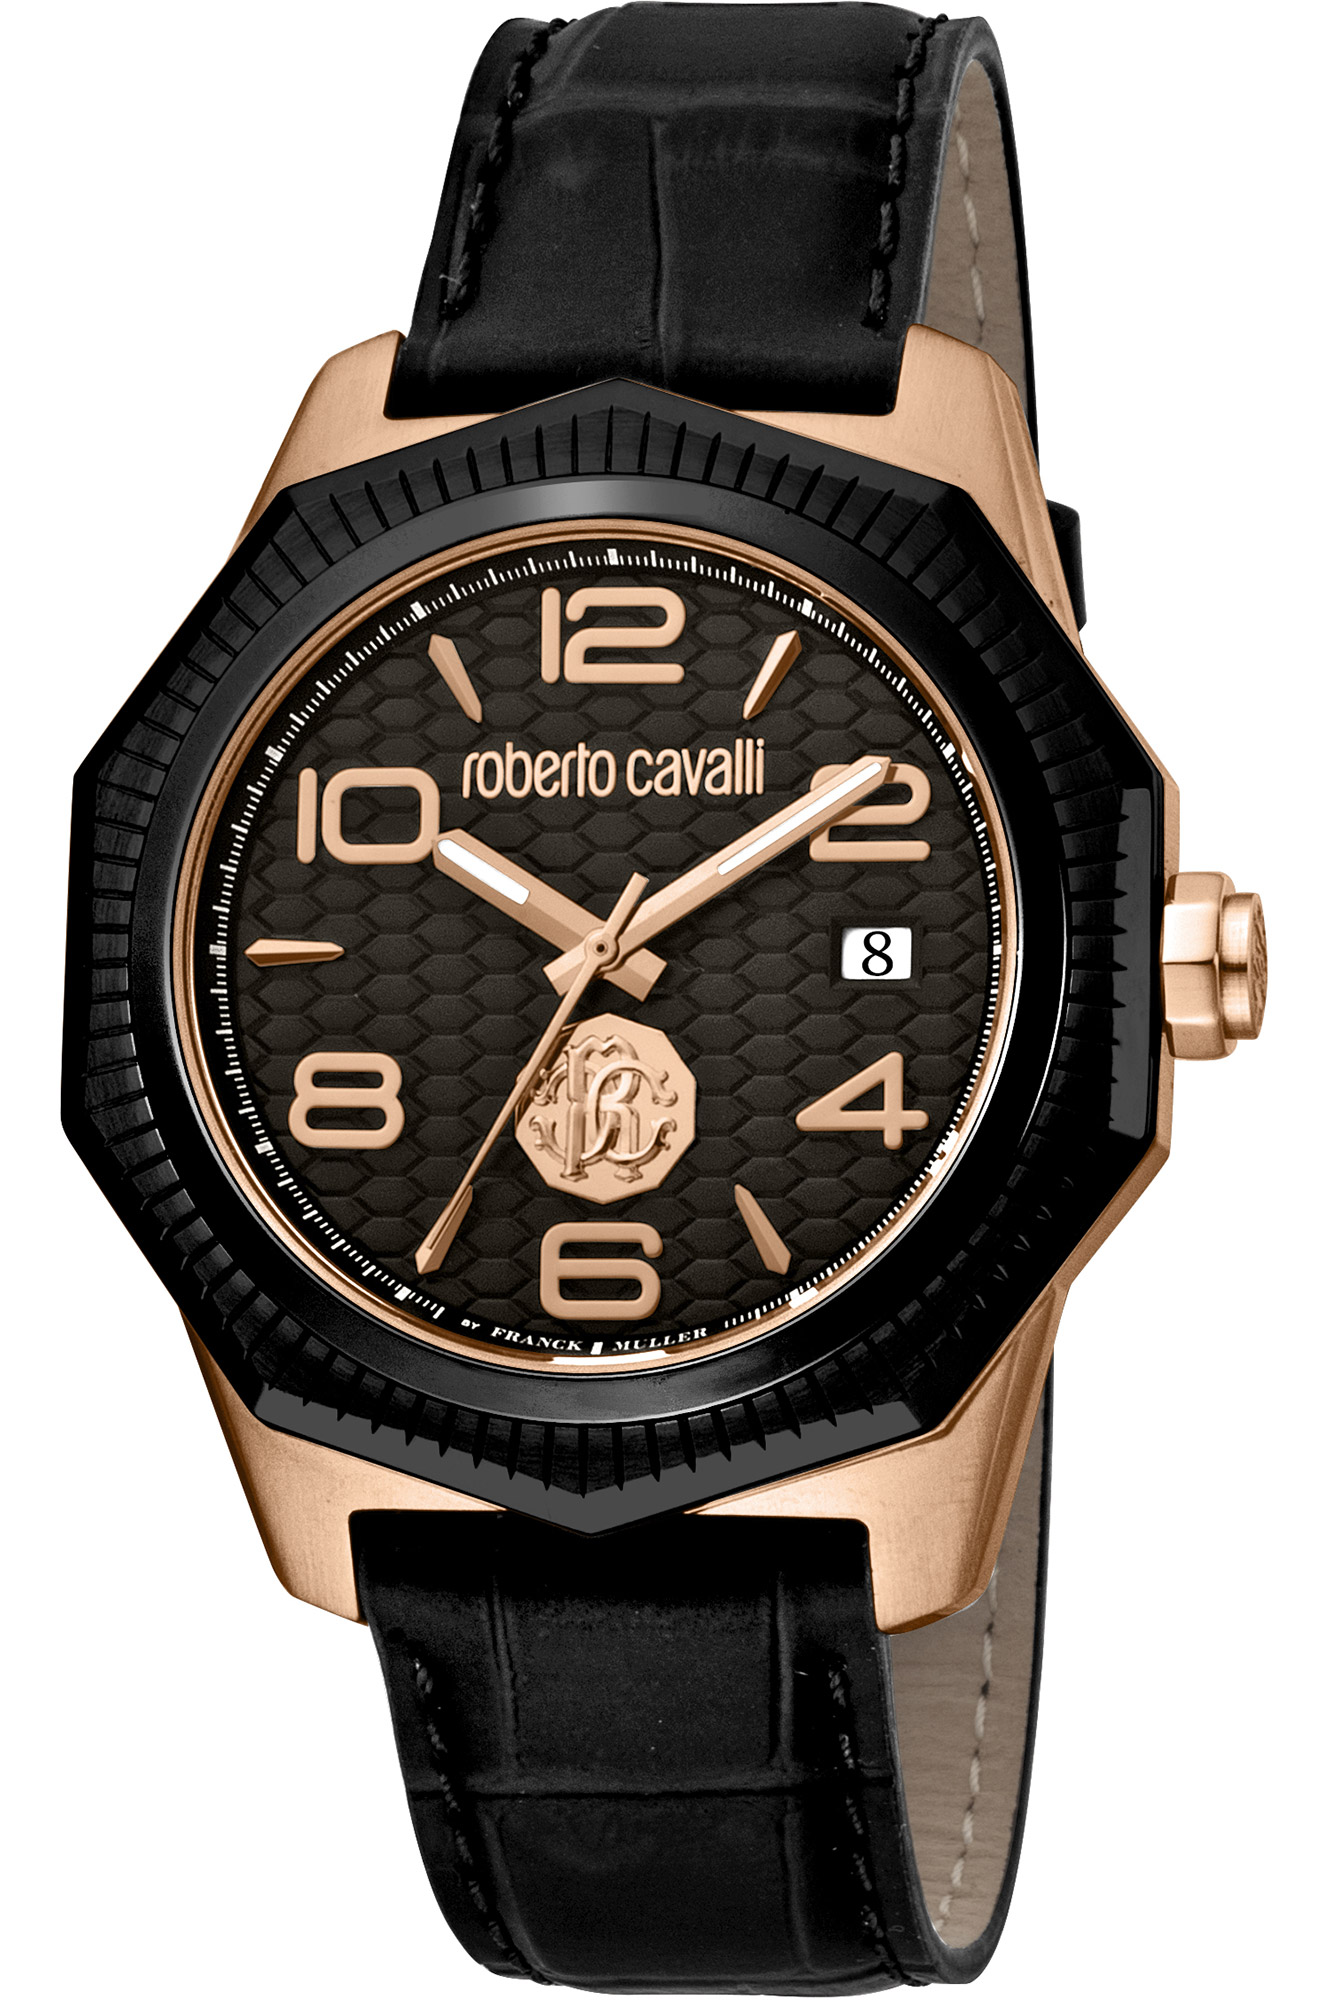 Watch Roberto Cavalli by Franck Muller rv1g119l0041